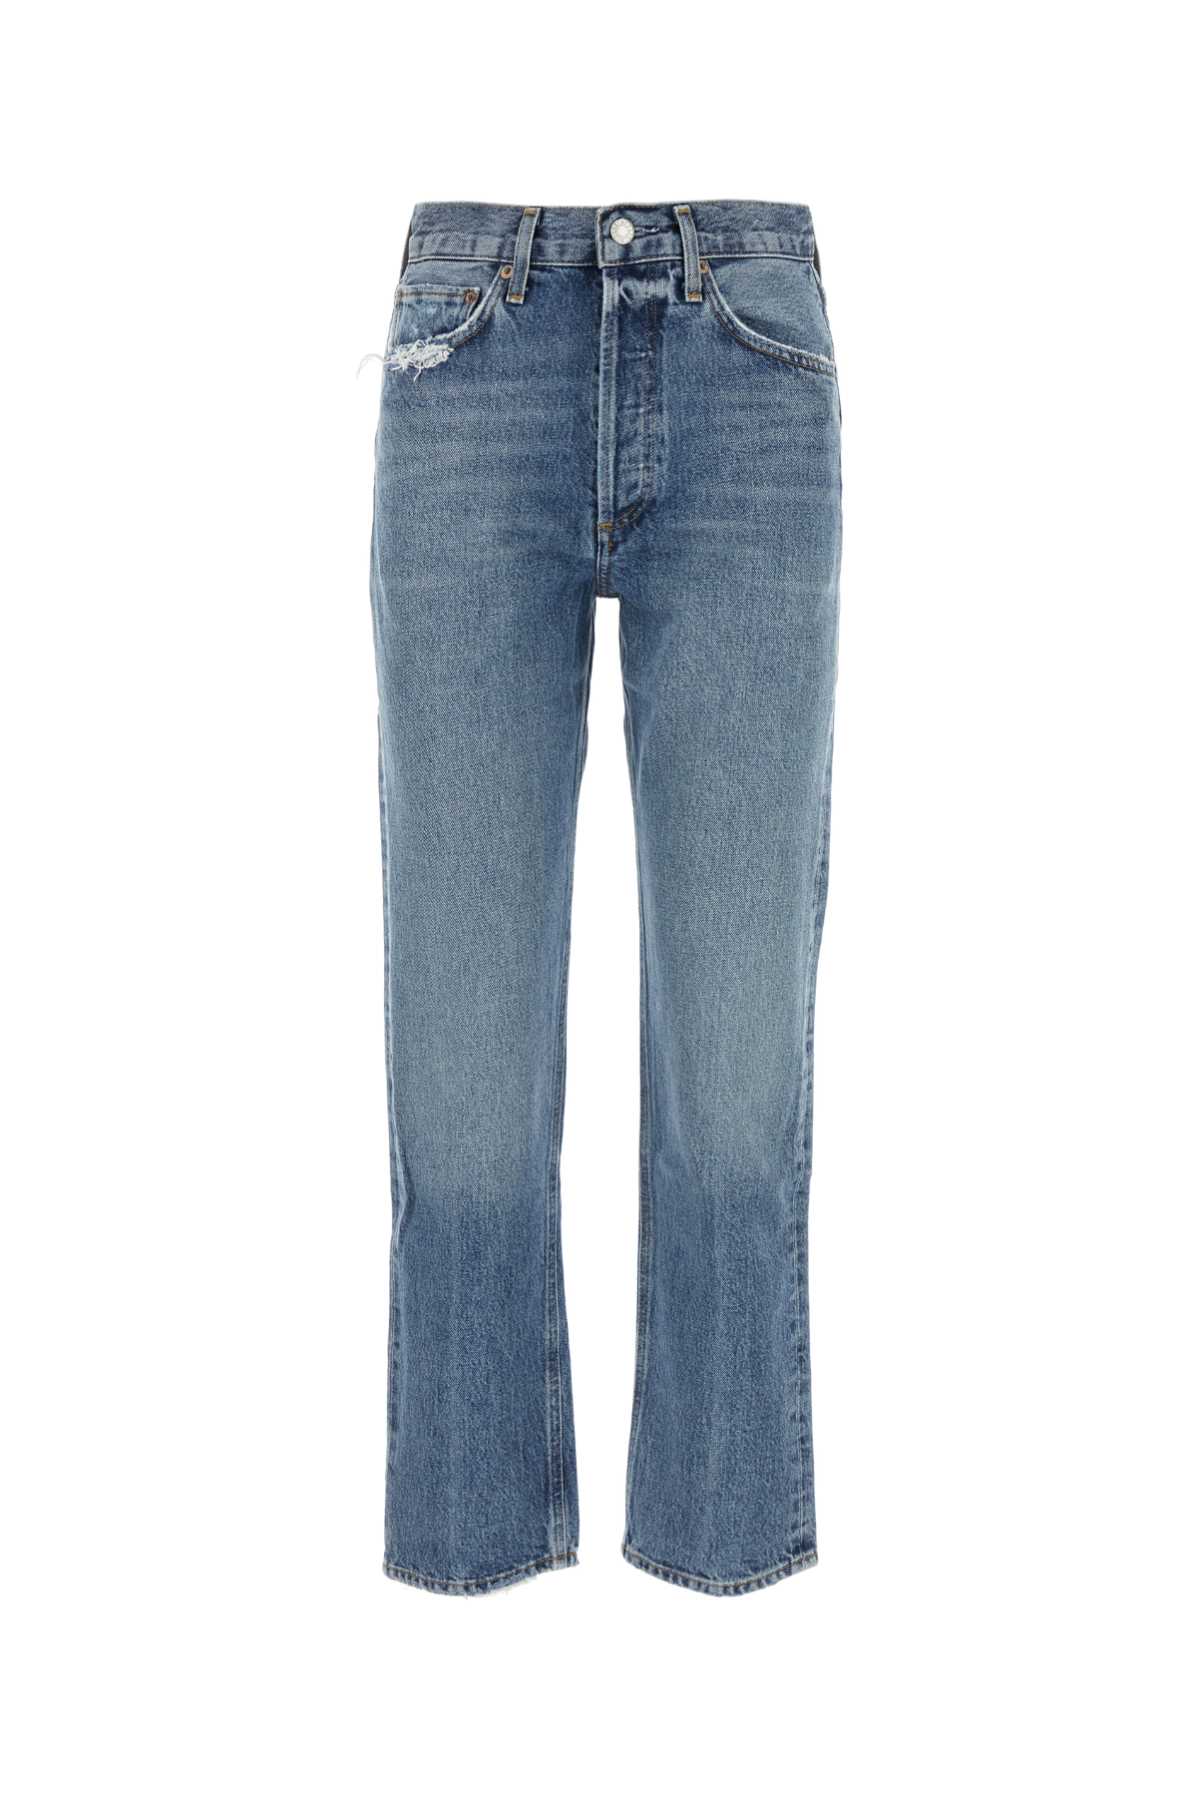 Denim 90s Jeans